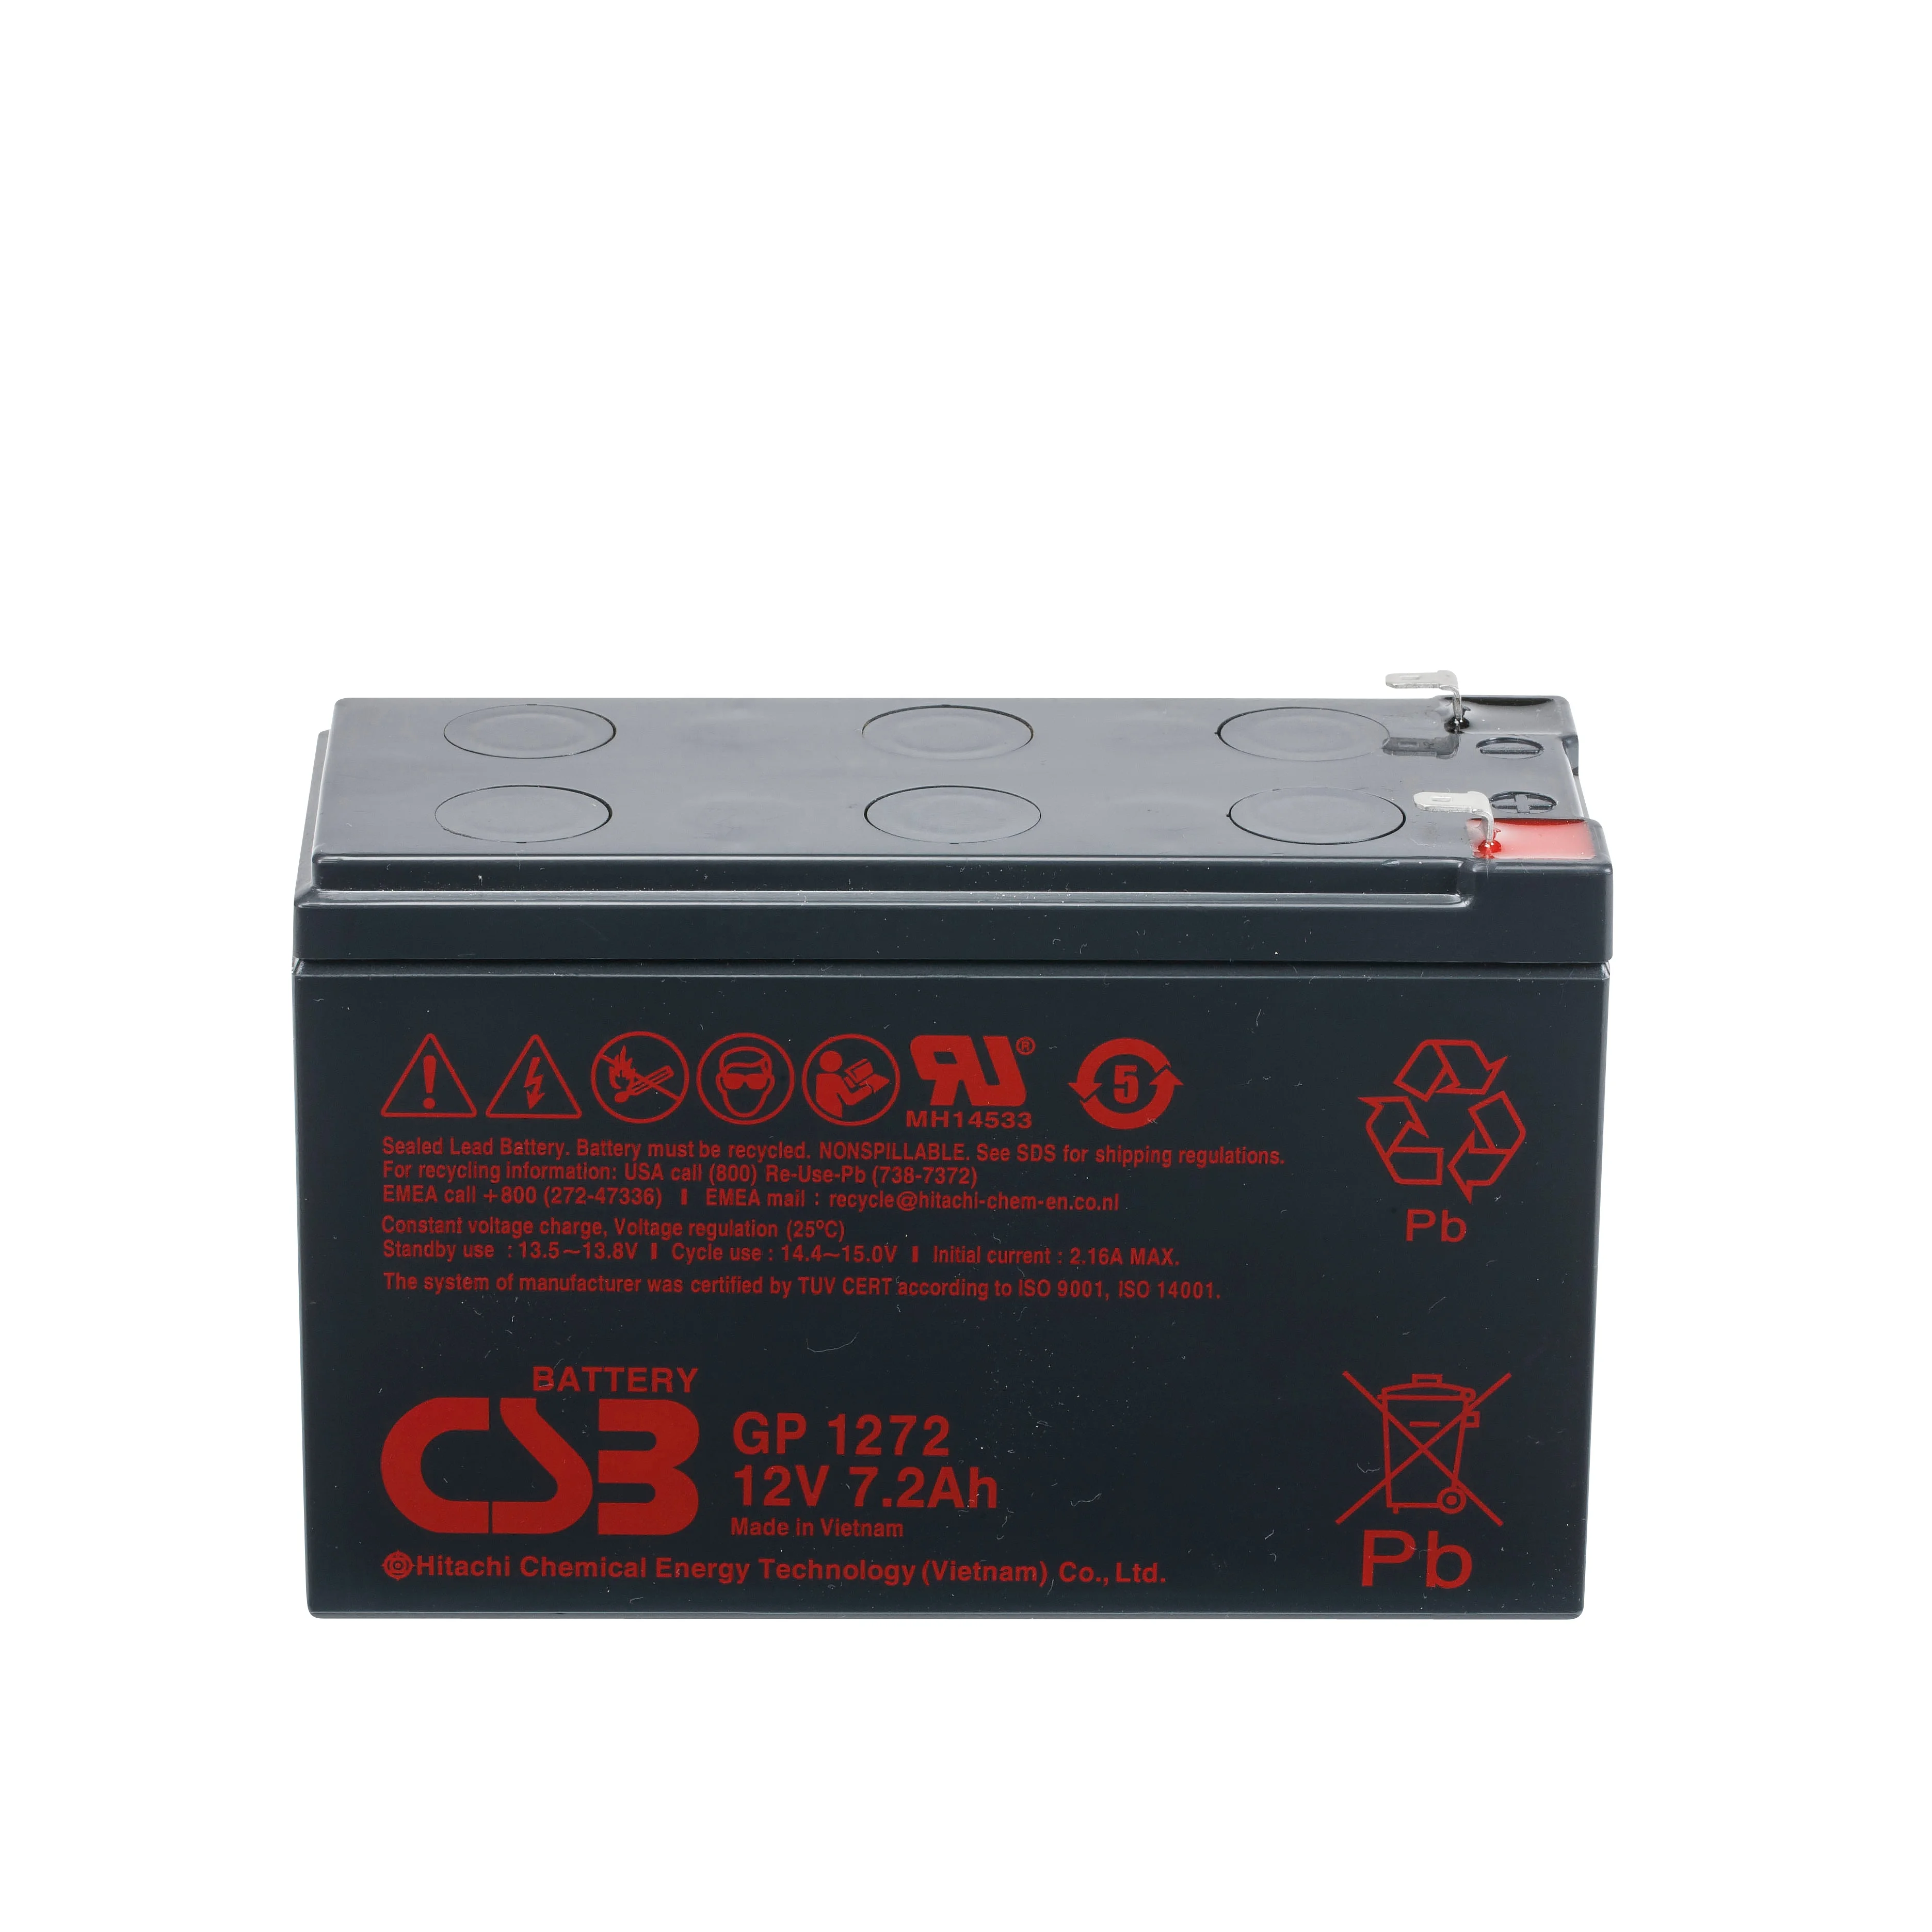 Gp1272 12v. Батарея CSB GP 1272 f2 (12v, 7.2Ah). Аккумуляторная батарея CSB gp1272 f2. Аккумуляторная батарея CSB ups 12460 9 а·ч. Аккумулятор CSB (gp1272/gp1272f) 12v 7.2Ah.